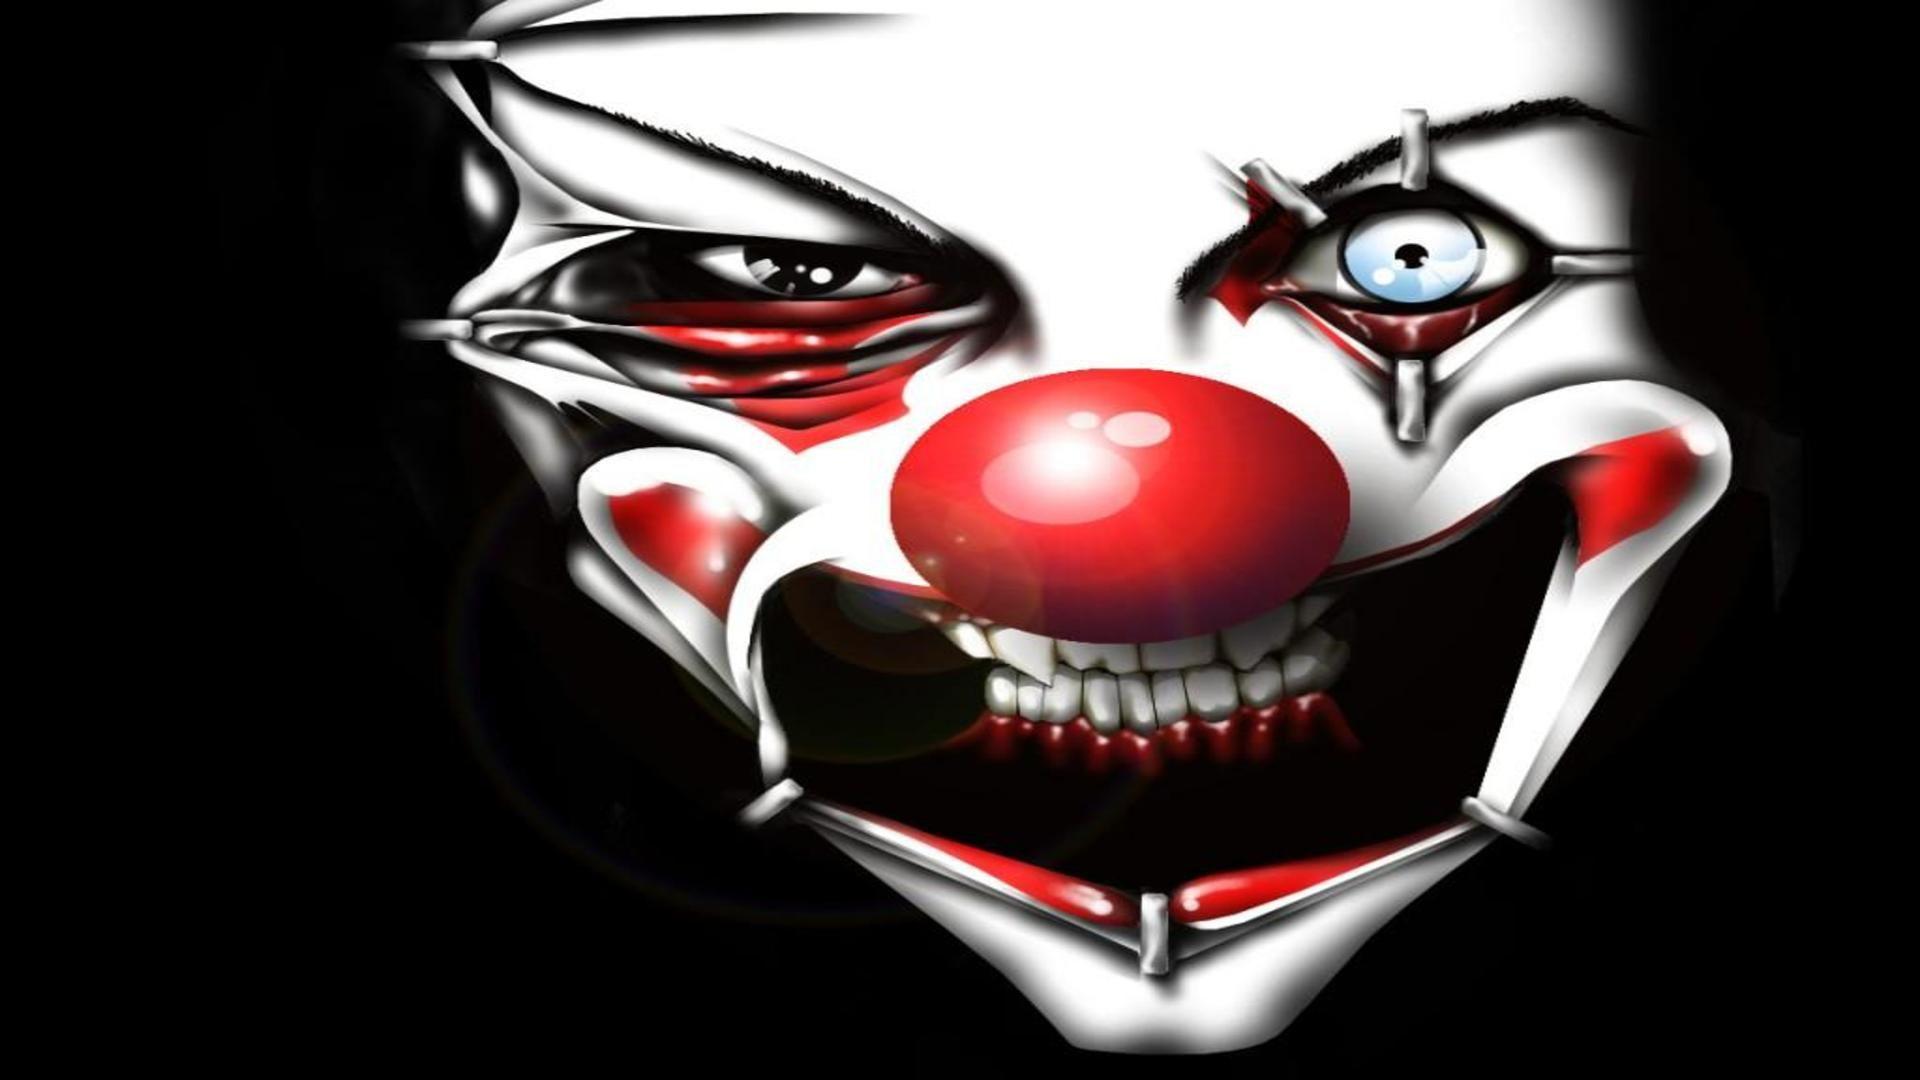 Evil Clown Face Desktop Background Wallpaper Image